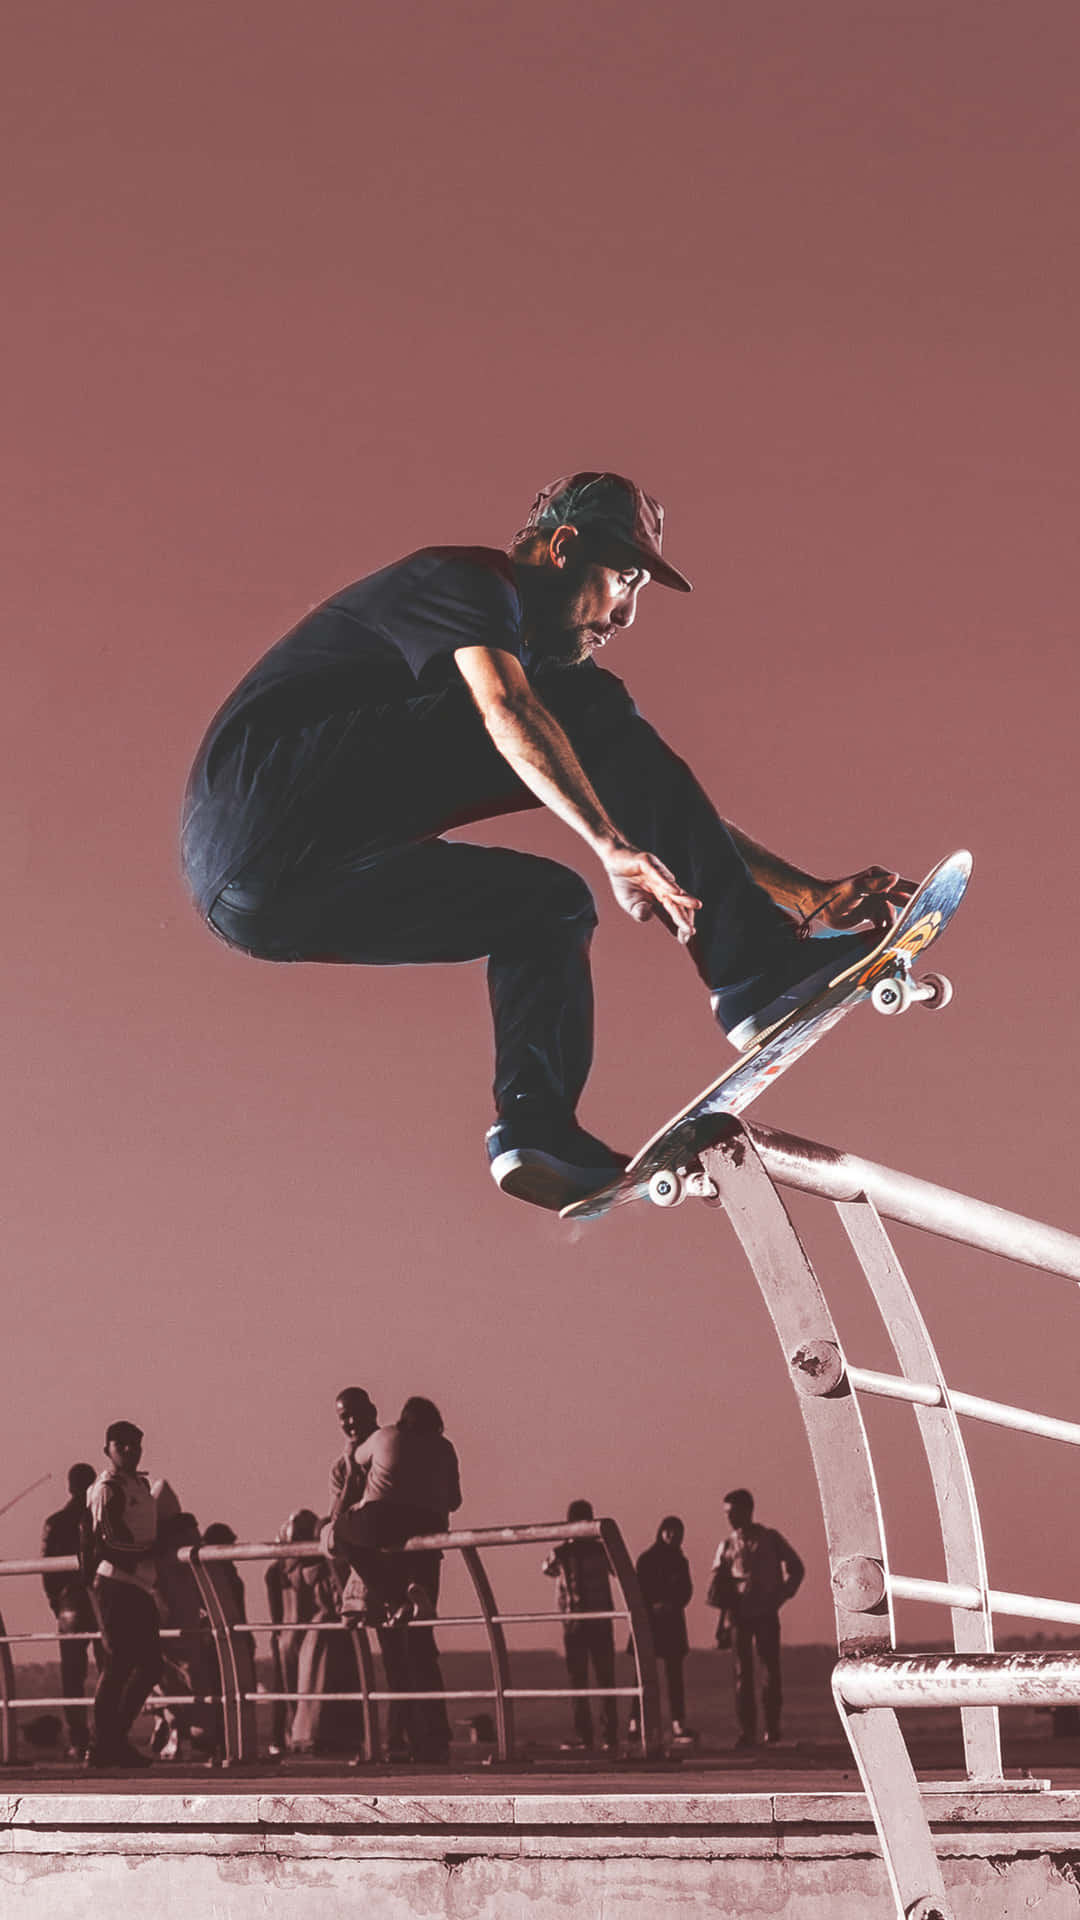 Skateboarder Mid Air Trick Wallpaper